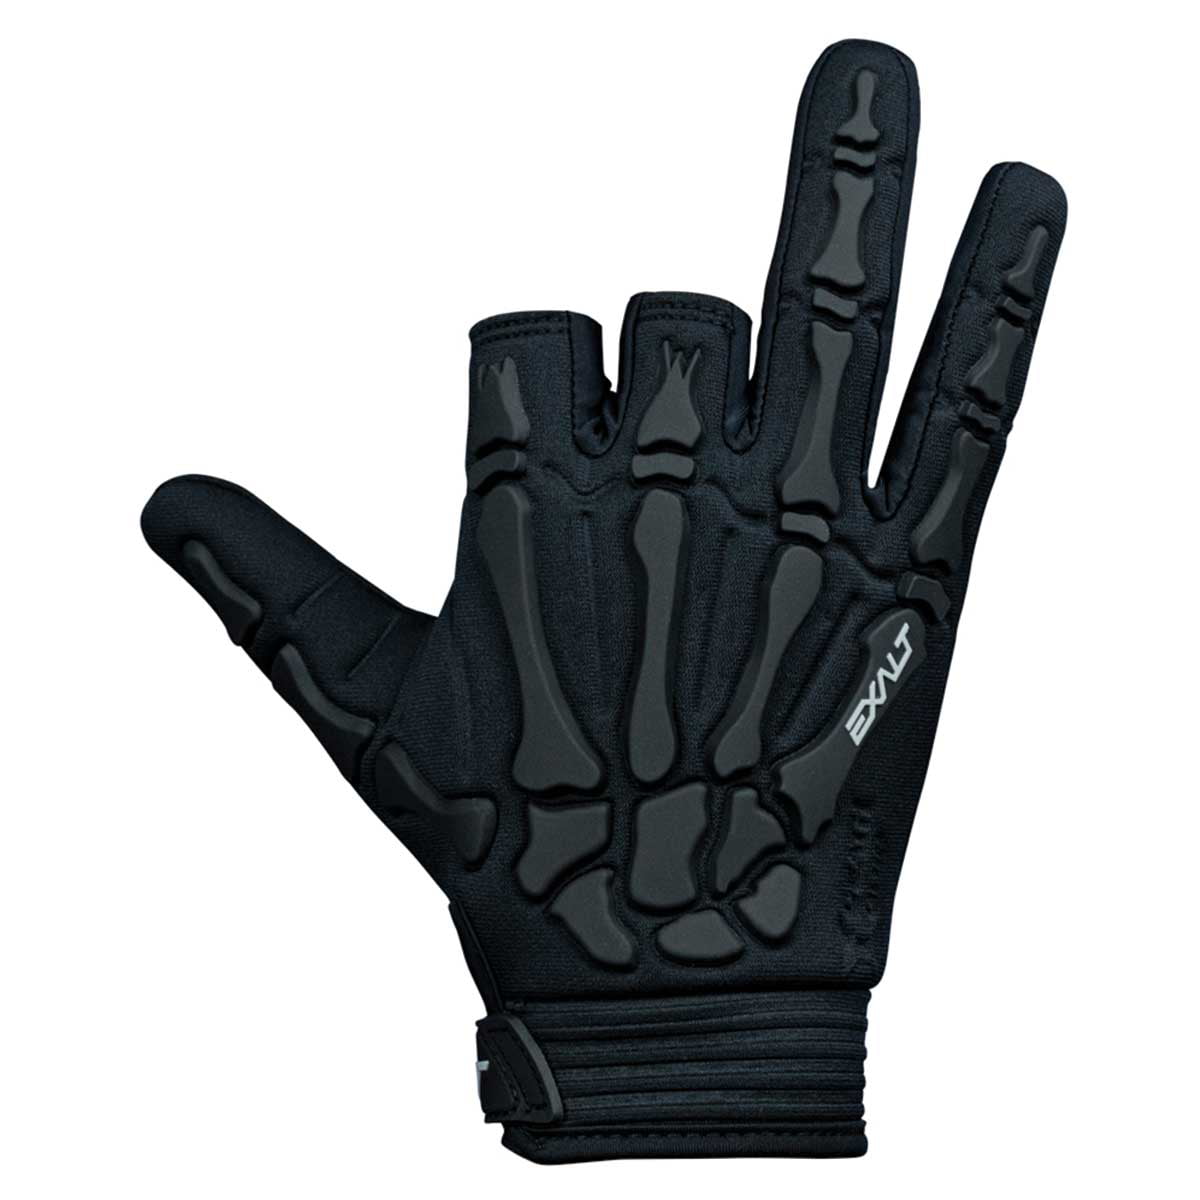 Exalt Paintball Death Grip Gloves - Black